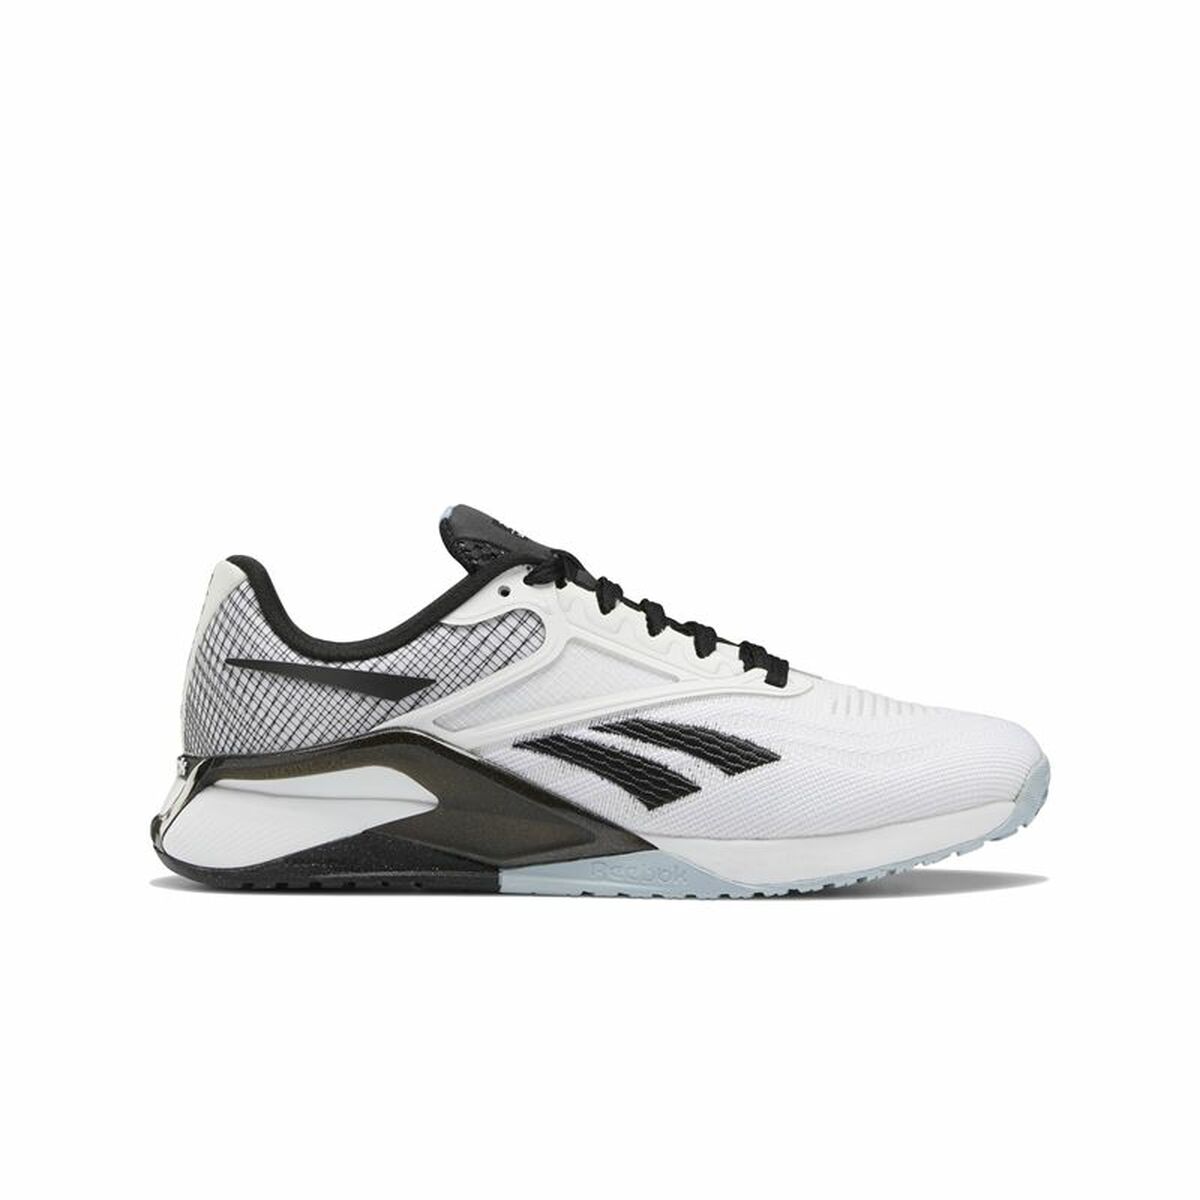 Pantofi sport pentru femei Reebok Nano X2 Alb/Negru - Mărime la picior 40